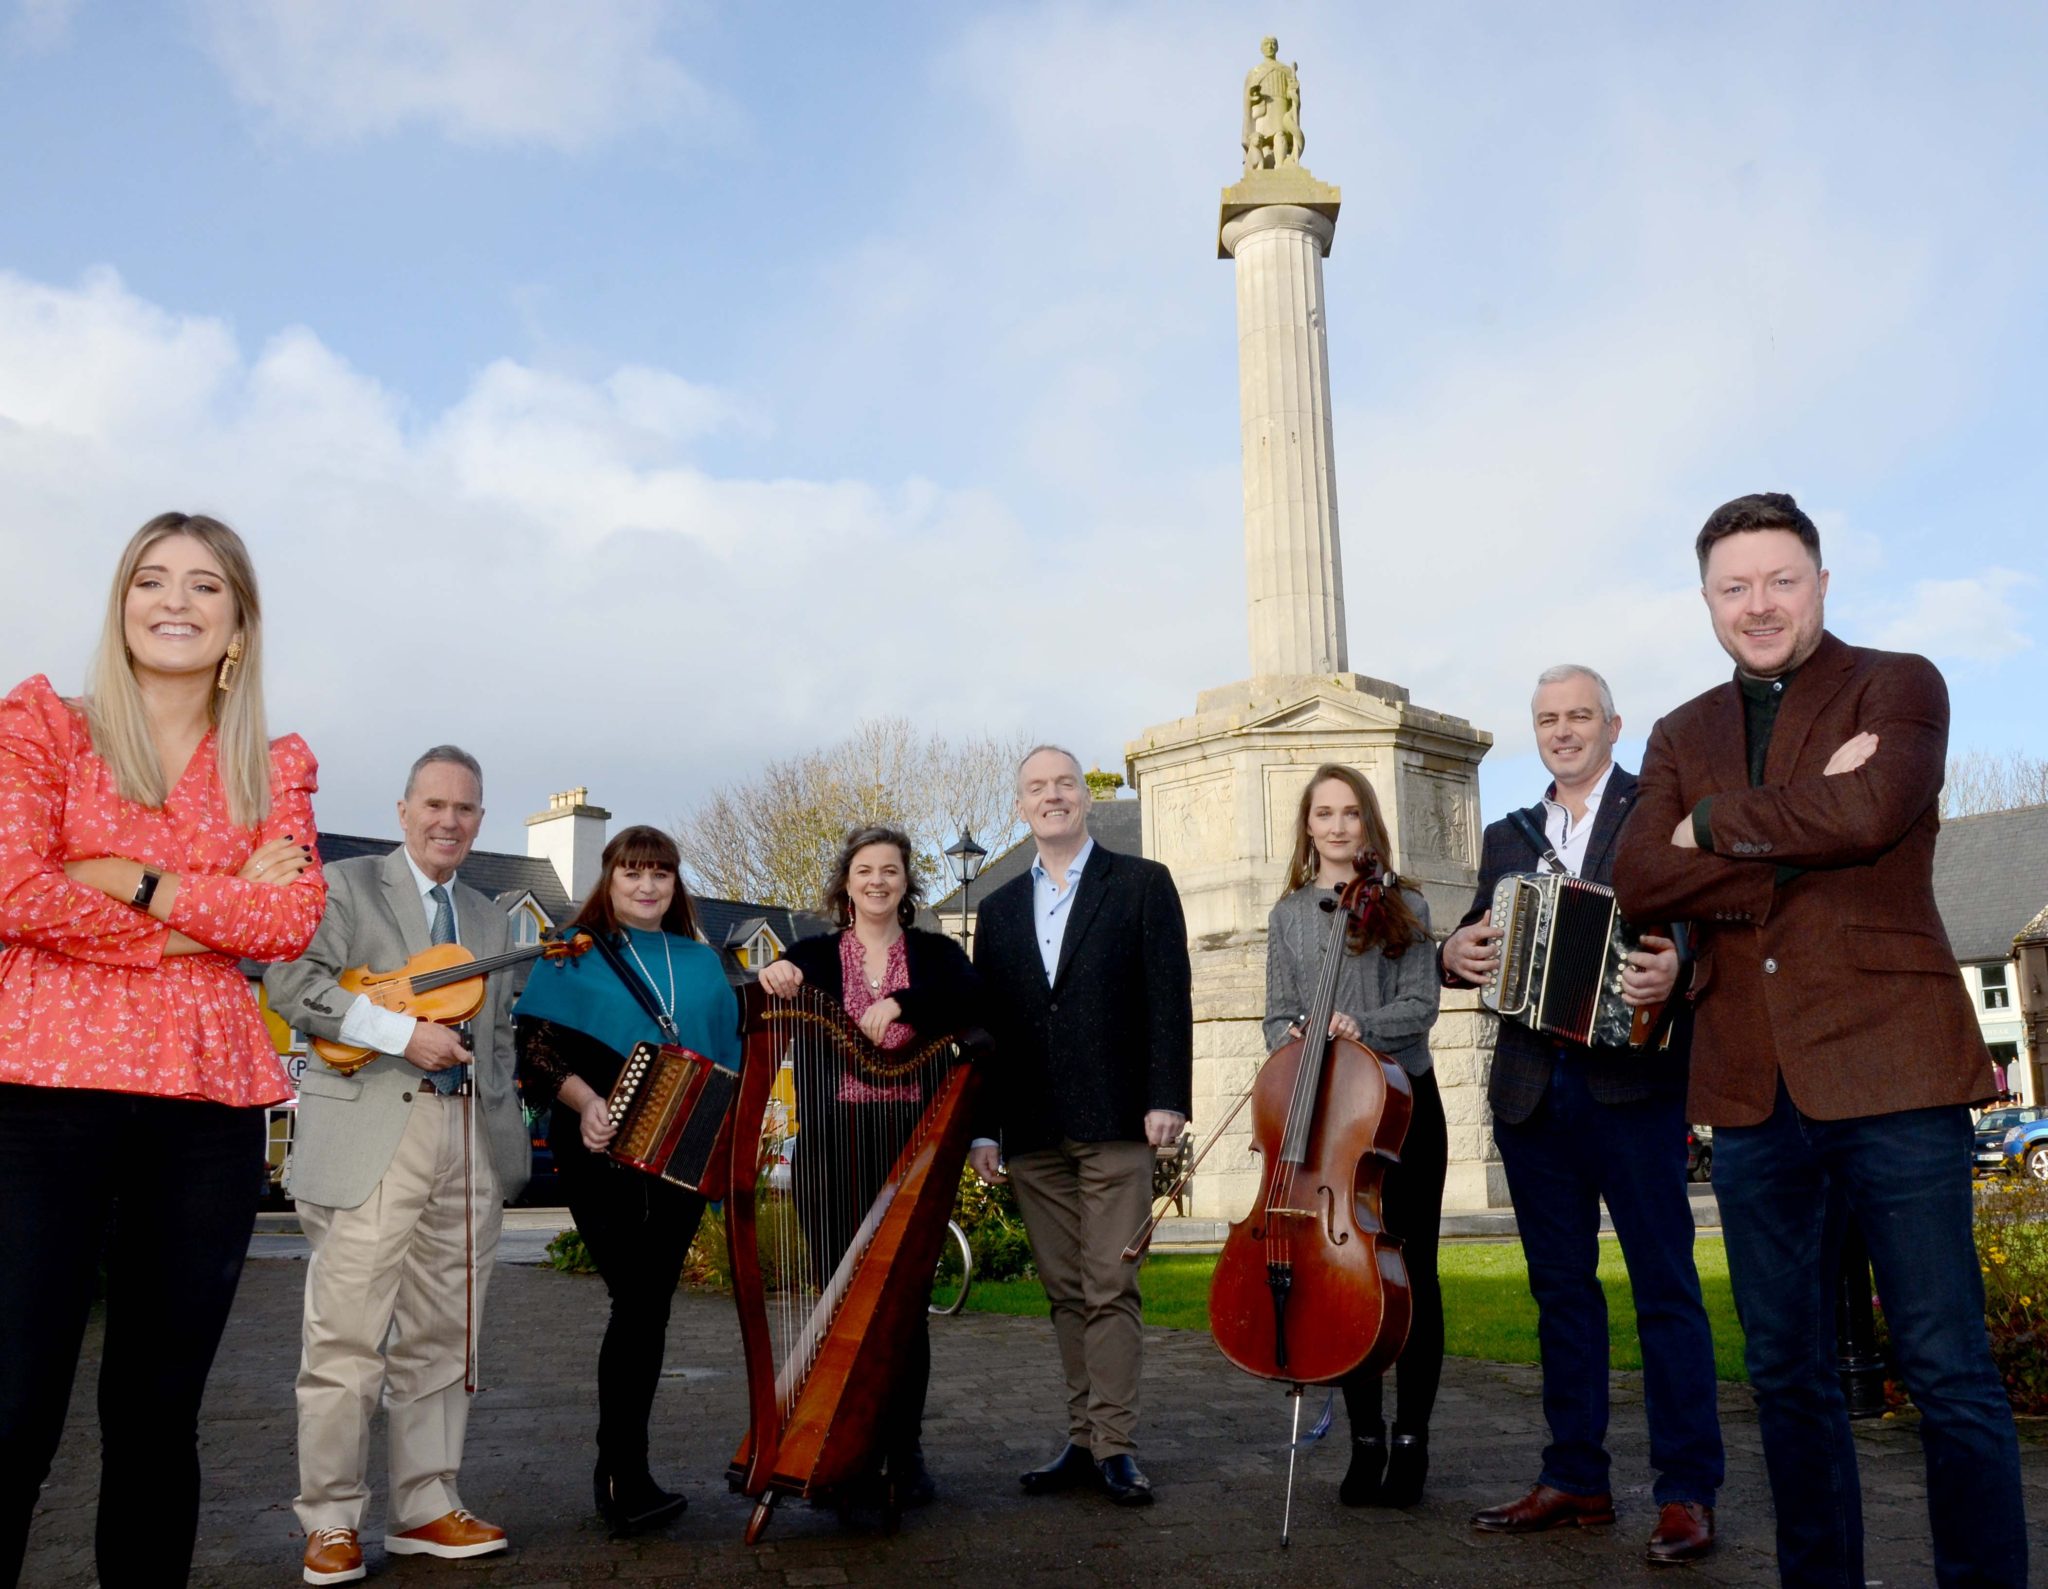 Irish Traditional Music Awards to broadcast live on BBC ALBA this